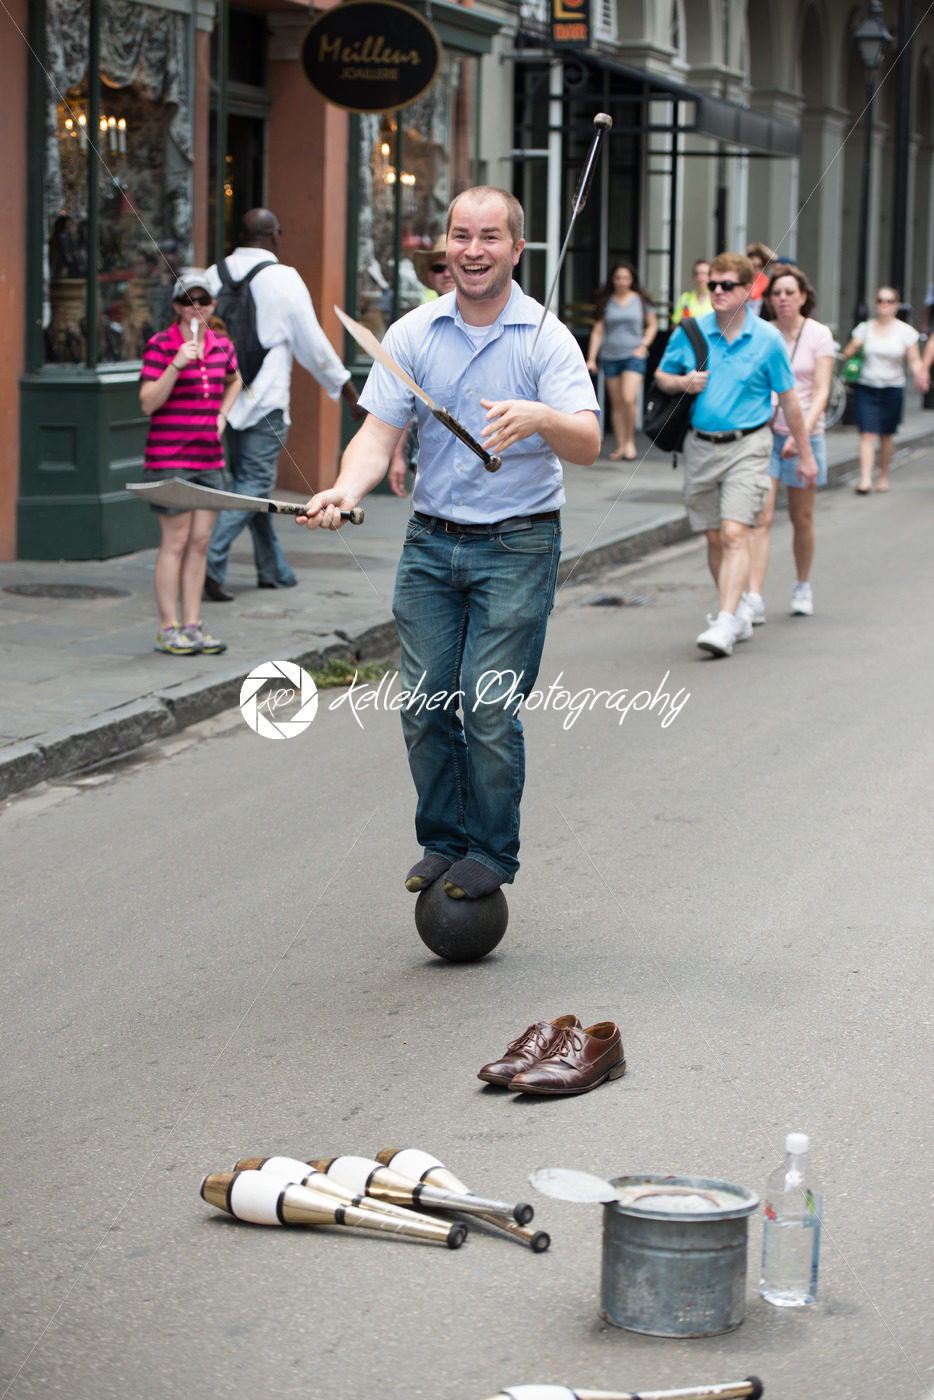 NEW ORLEANS, LA – APRIL 13: Juggler performs on street in New Orleans, LA on April 13, 2014 - Kelleher Photography Store